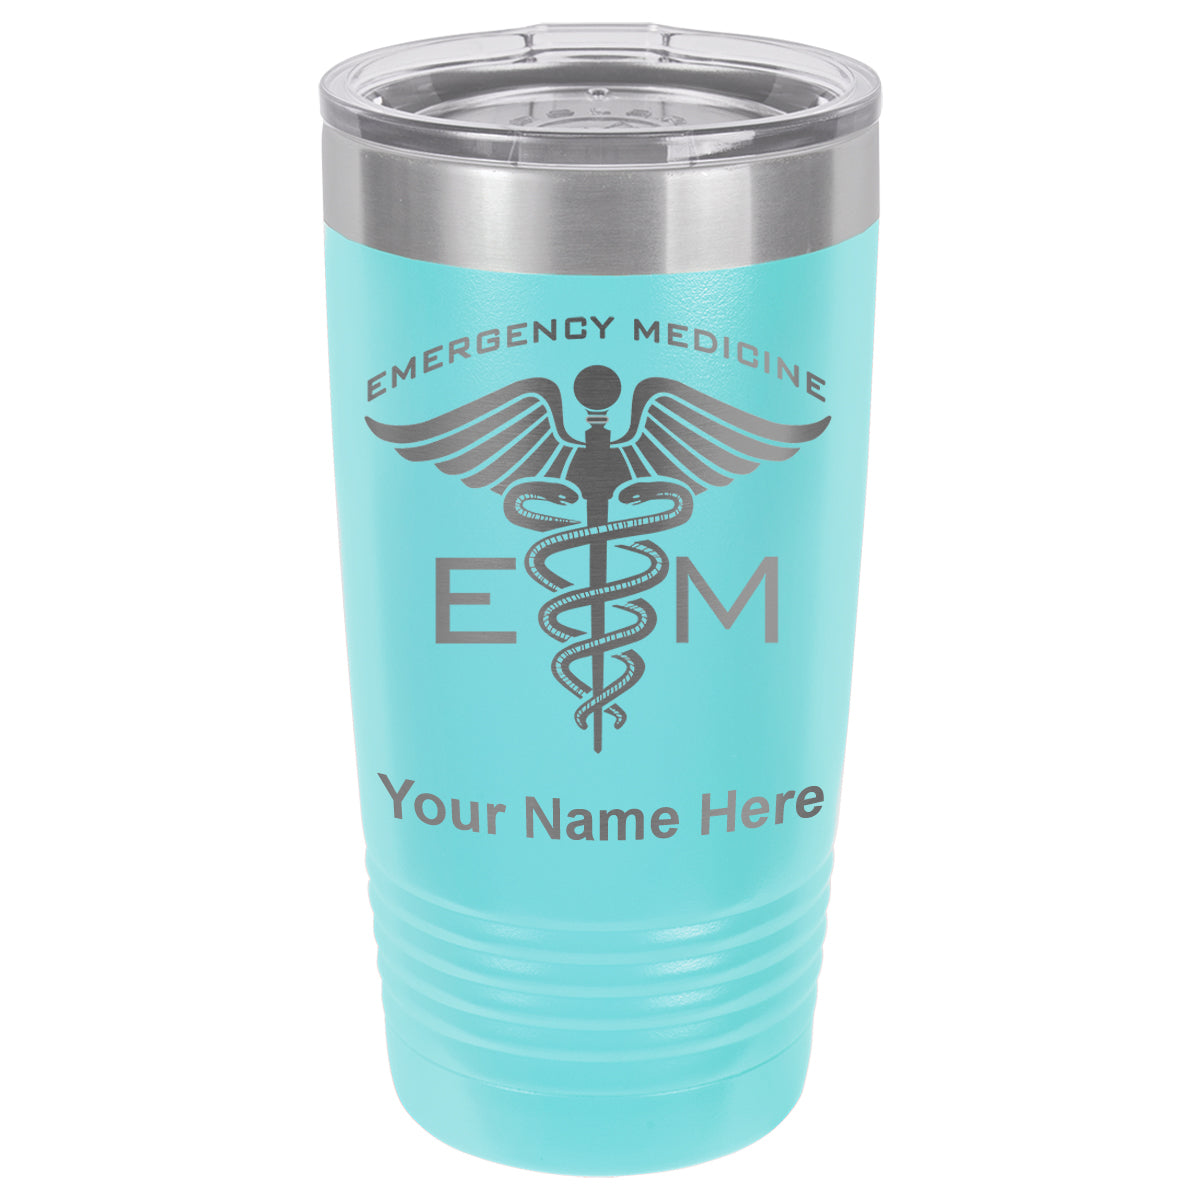 20oz Vacuum Insulated Tumbler Mug, Emergency Medicine, Personalized Engraving Included